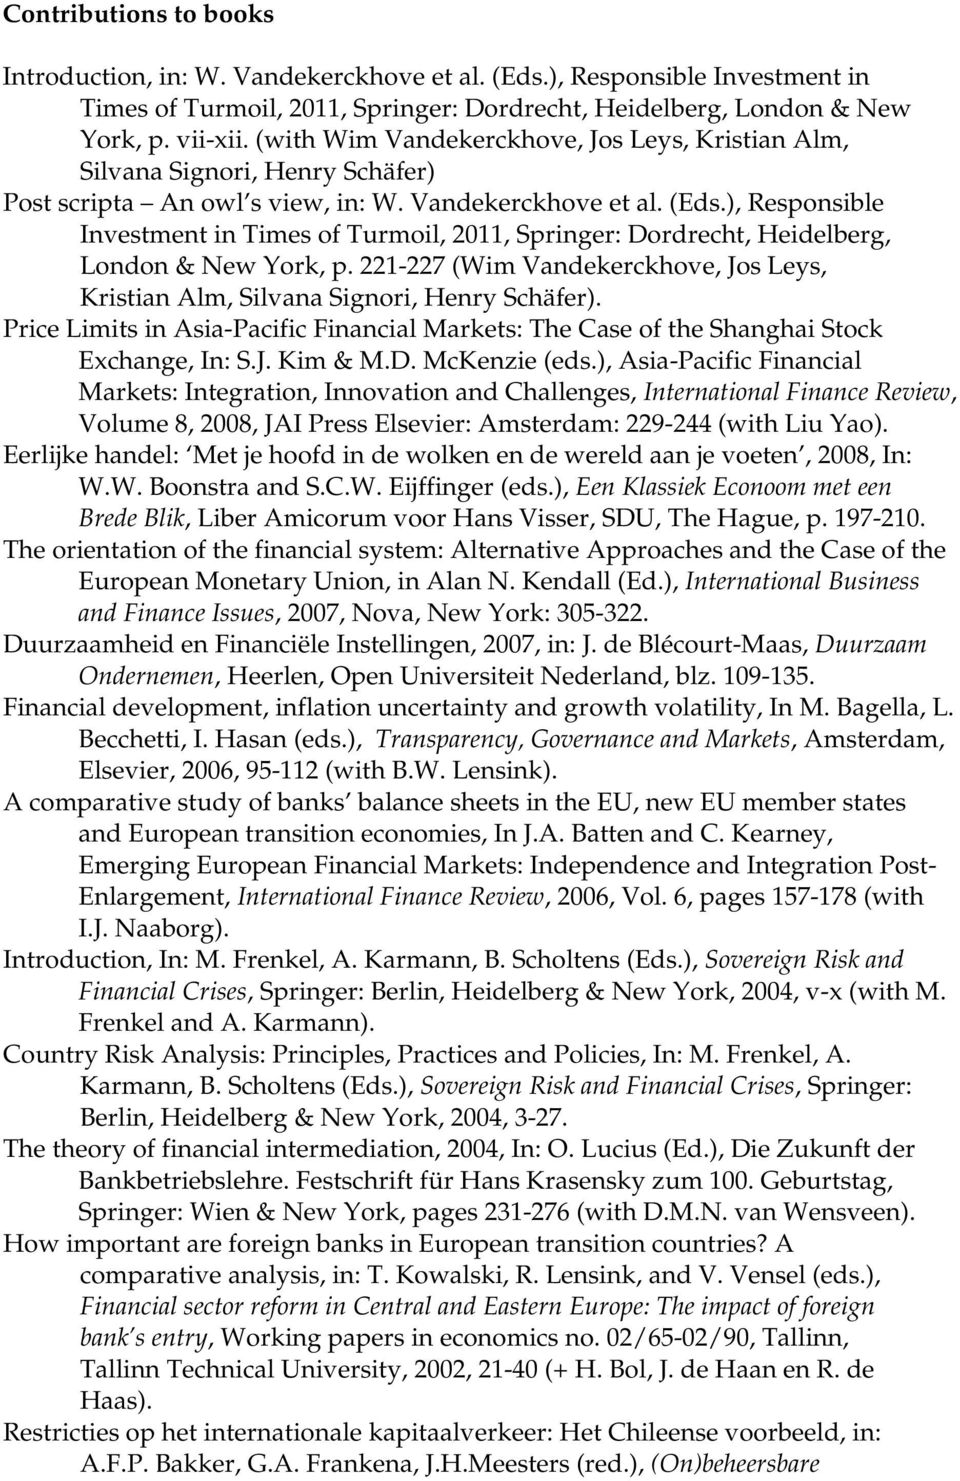 ), Responsible Investment in Times of Turmoil, 2011, Springer: Dordrecht, Heidelberg, London & New York, p. 221-227 (Wim Vandekerckhove, Jos Leys, Kristian Alm, Silvana Signori, Henry Schäfer).